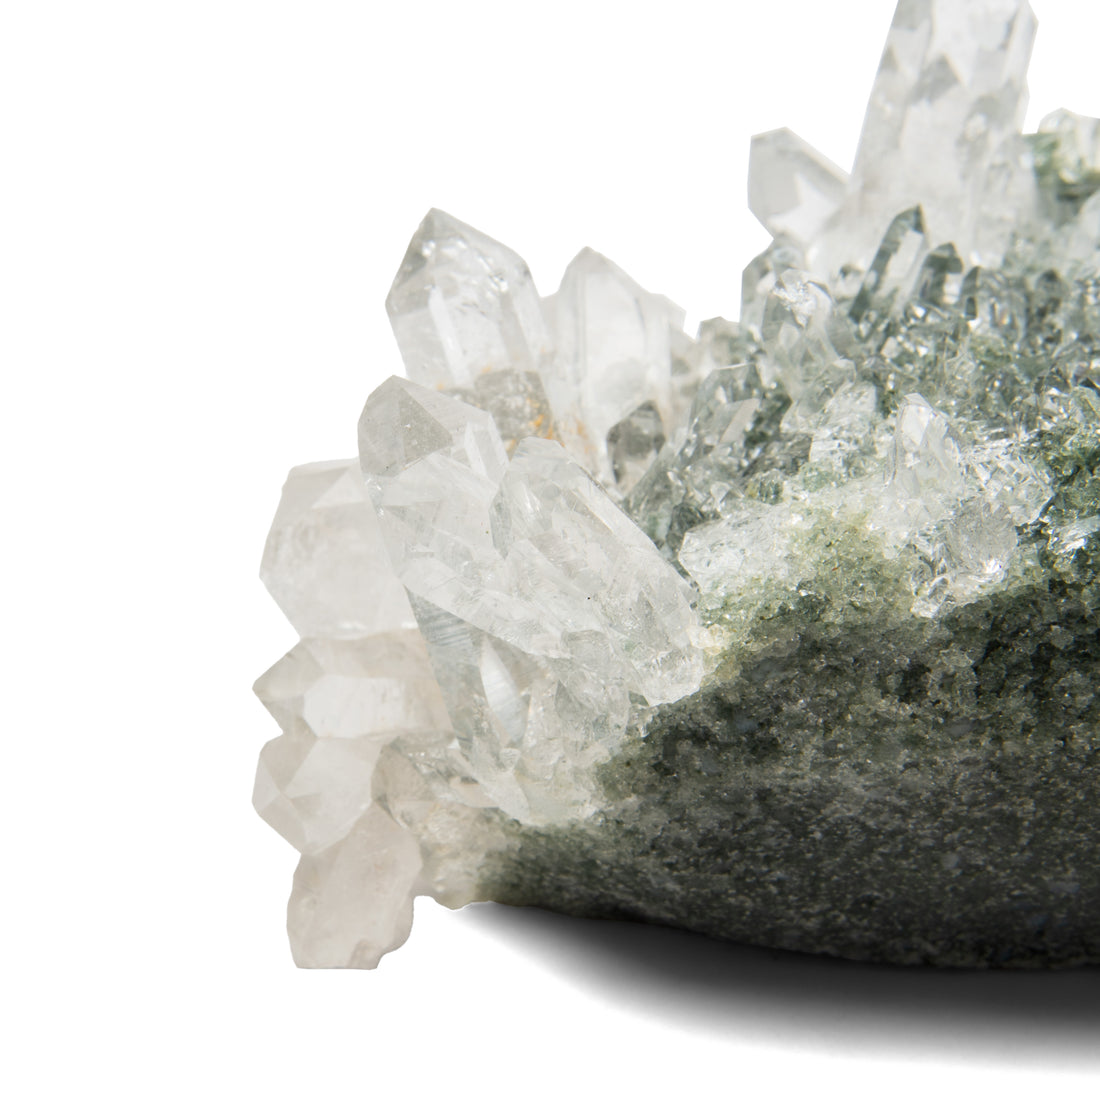 Himalayan Quartz w/ Chlorite and Actinolite